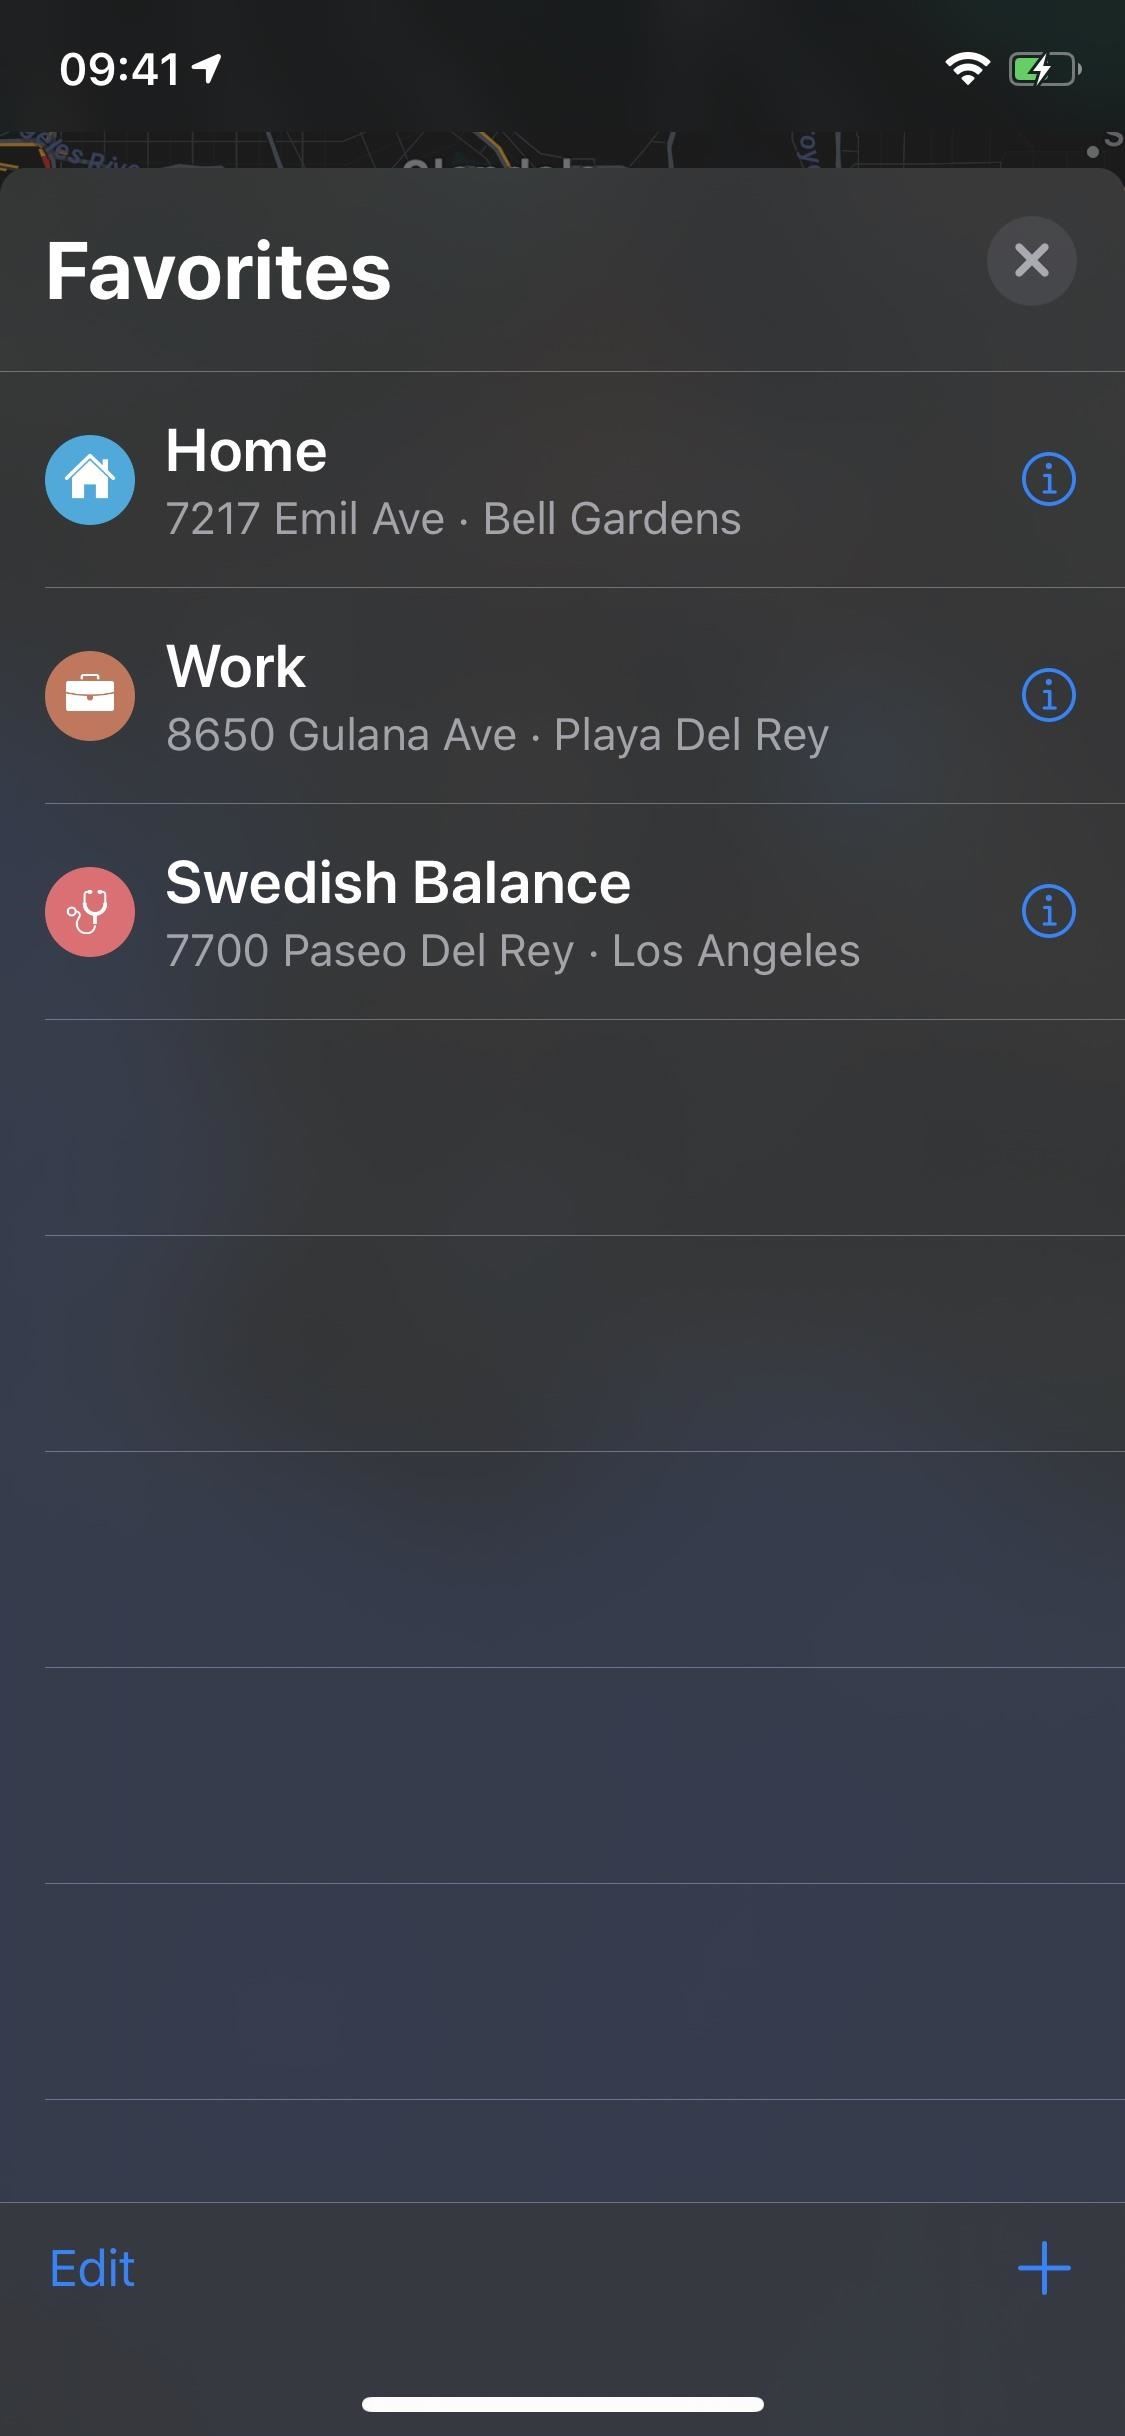 How to Add, Rearrange, Edit & Delete Favorite Locations in Apple Maps in iOS 13